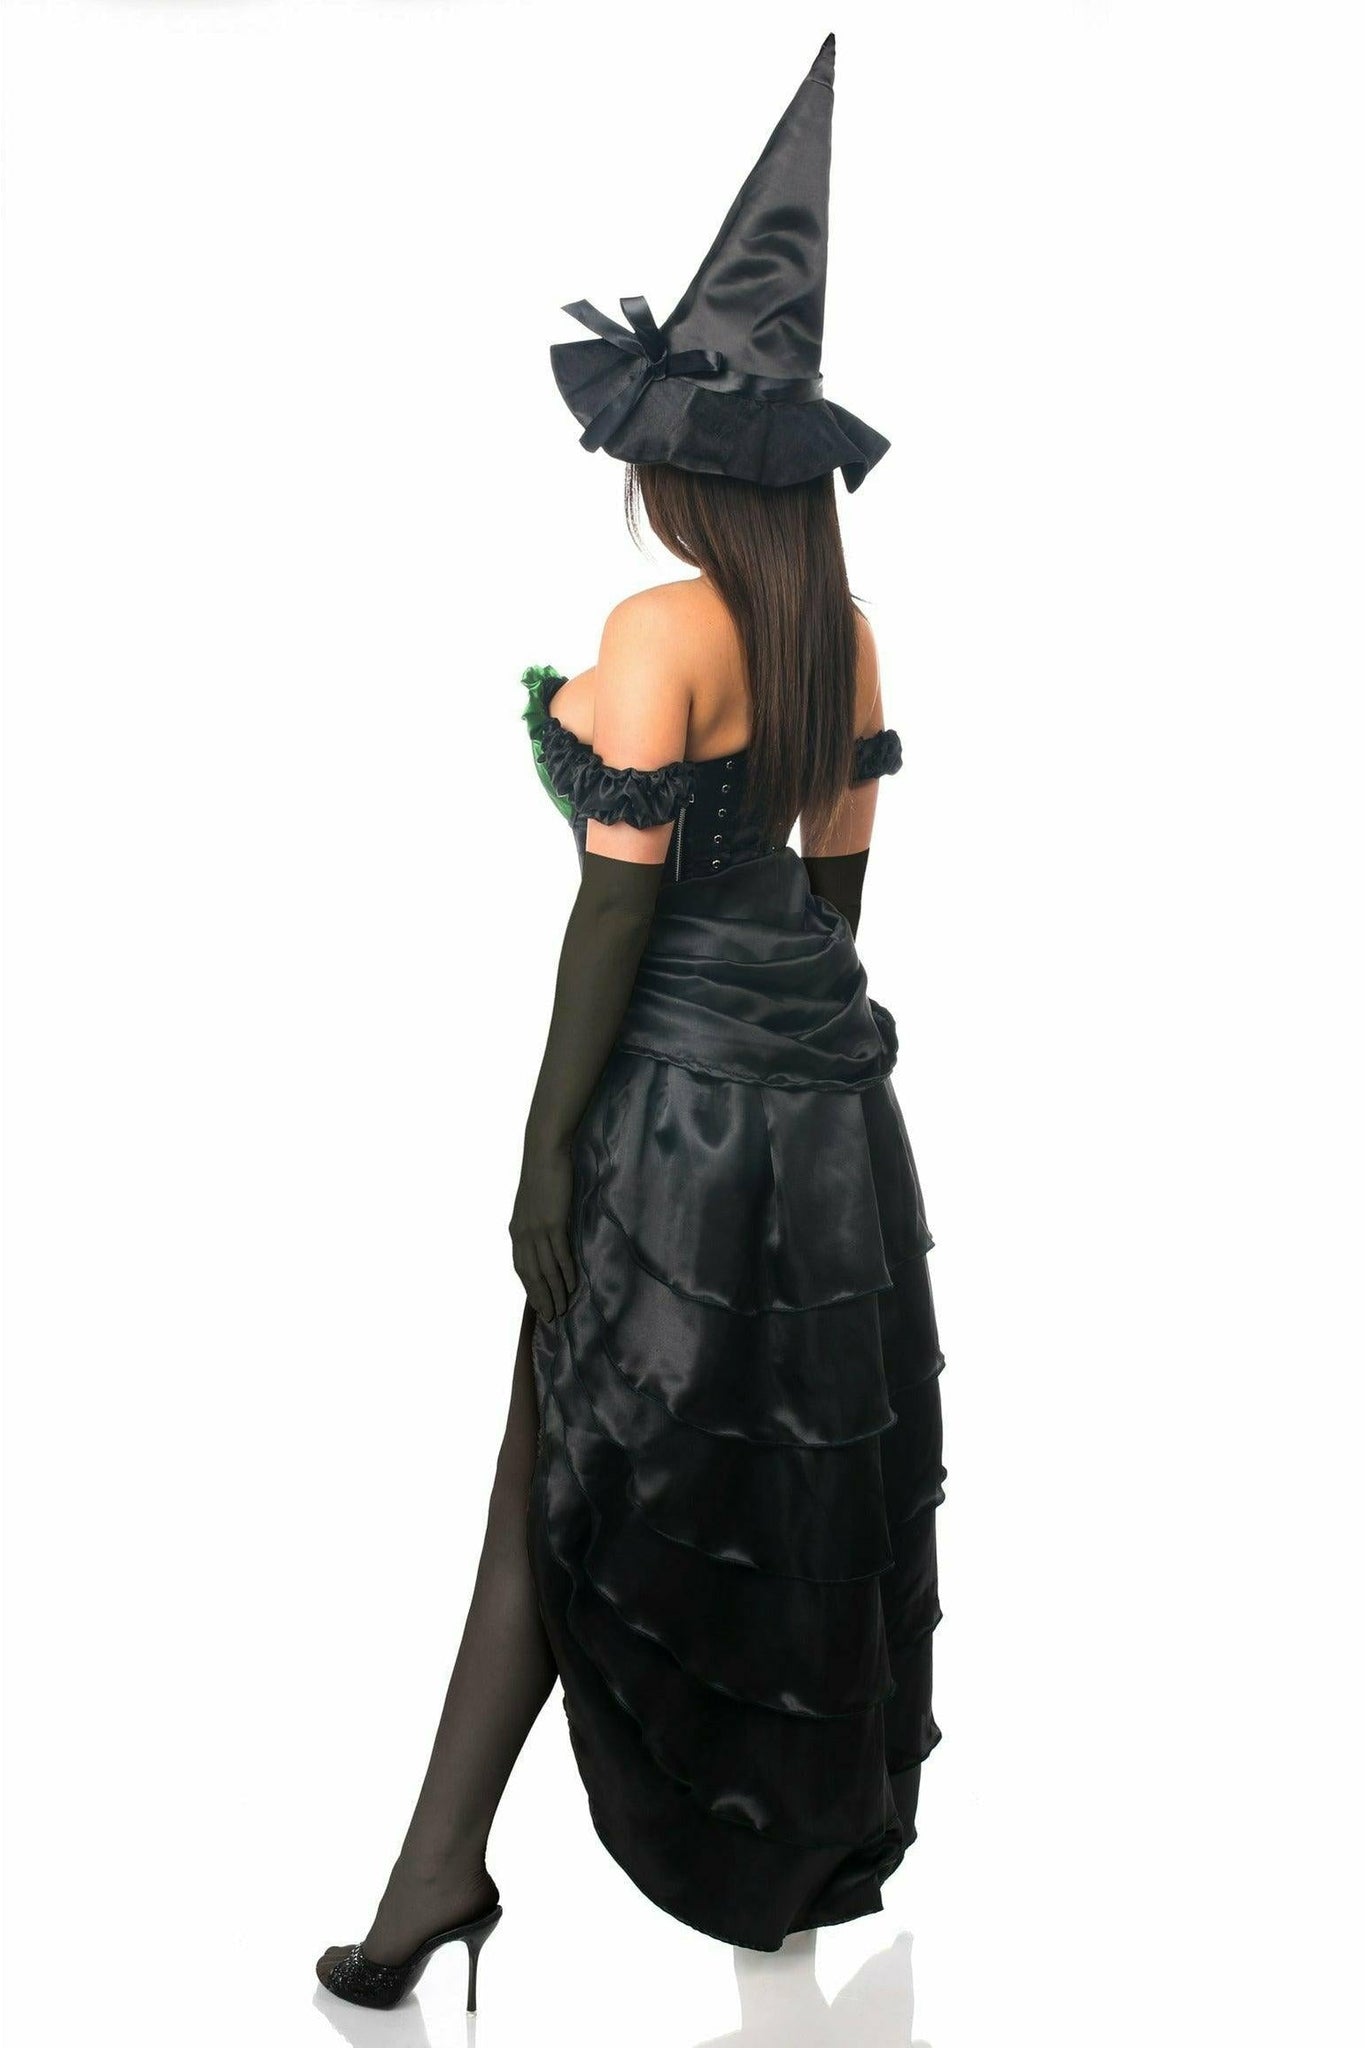 Premium 5 Piece Spellbound Witch Costume in Size S, M, L, XL, 2X, 3X, 4X, 5X, or 6X